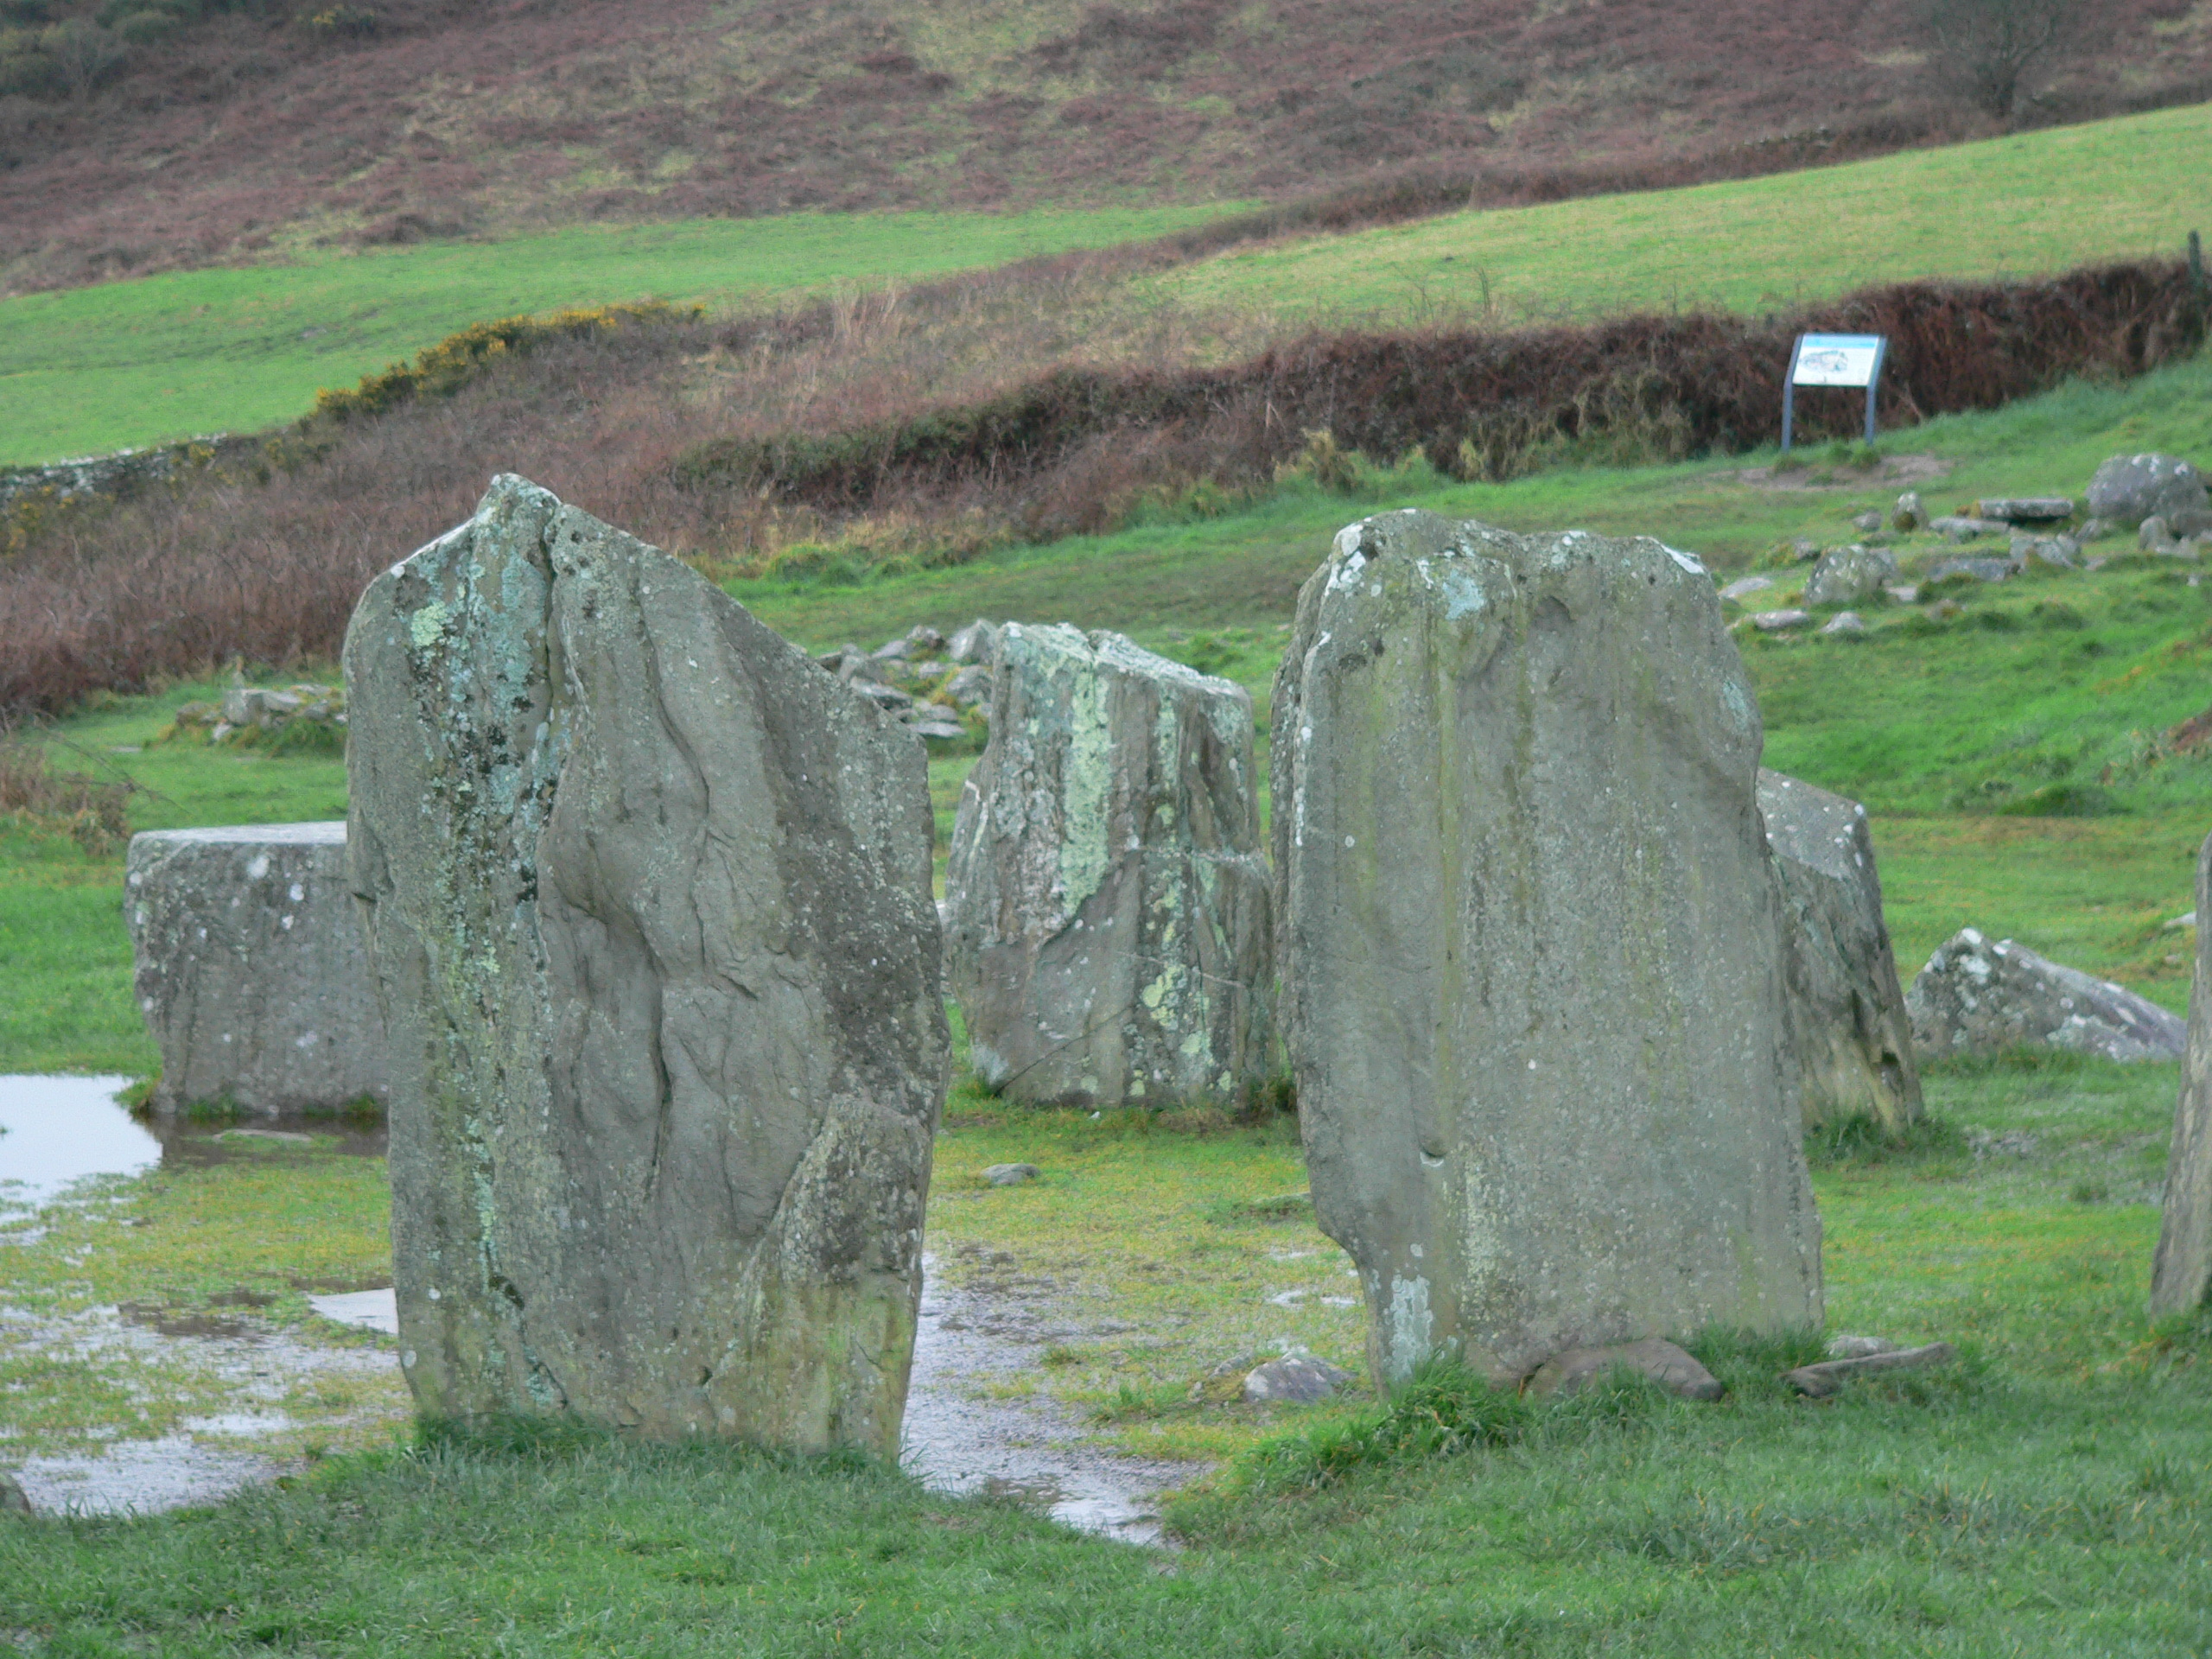 Entrance stones to Drombeg Stone Circle